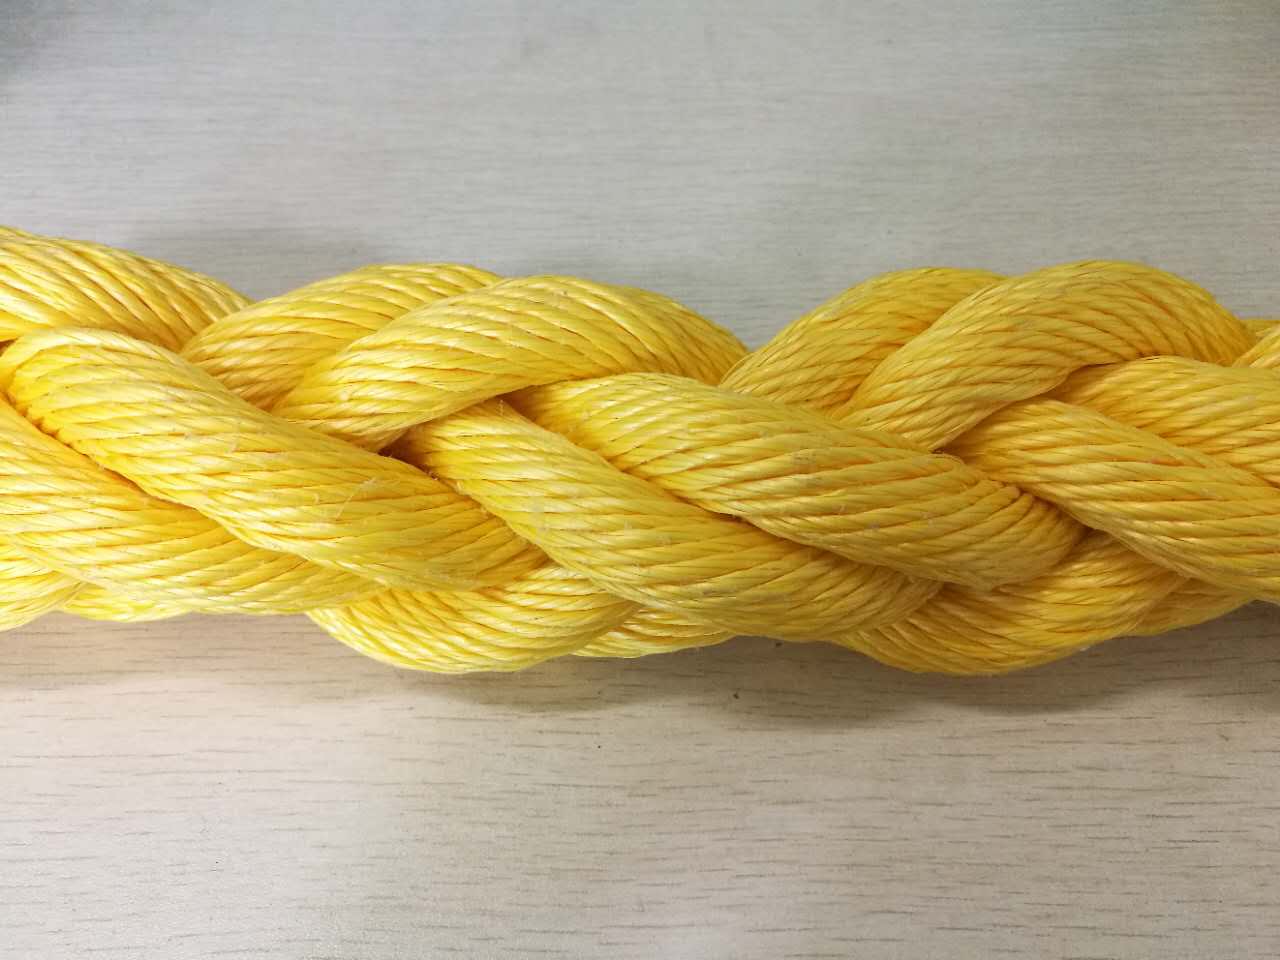 PP rope